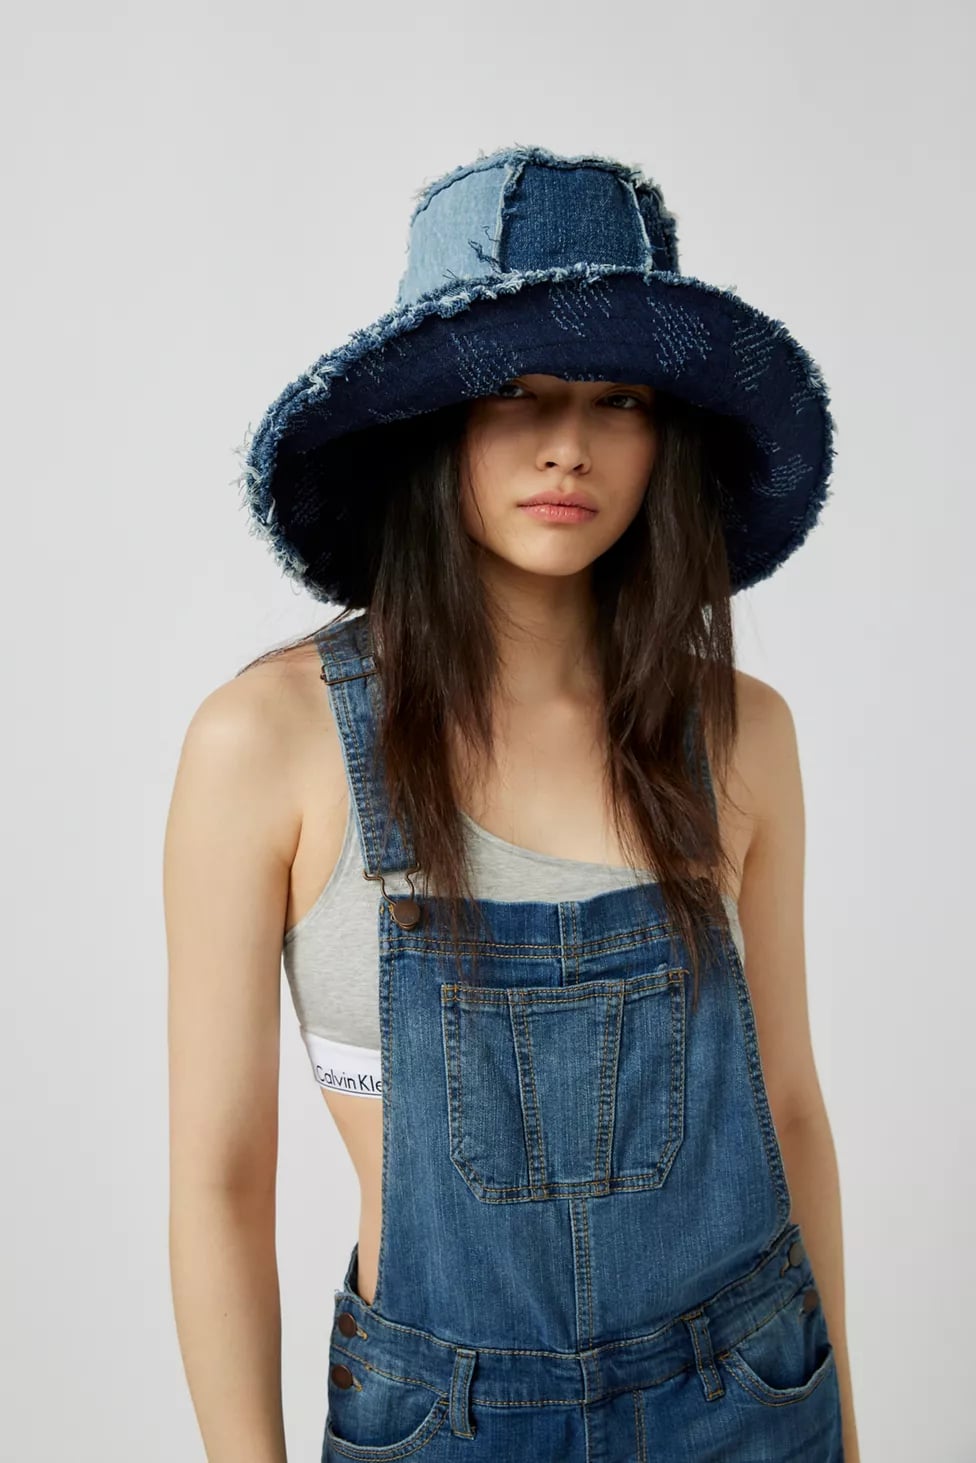 Shop Bucket Hats: UO Sadie Denim Patchwork Floppy Bucket Hat | 8 Bucket-Hat  Outfit Ideas to Try This Spring | POPSUGAR Fashion Photo 13